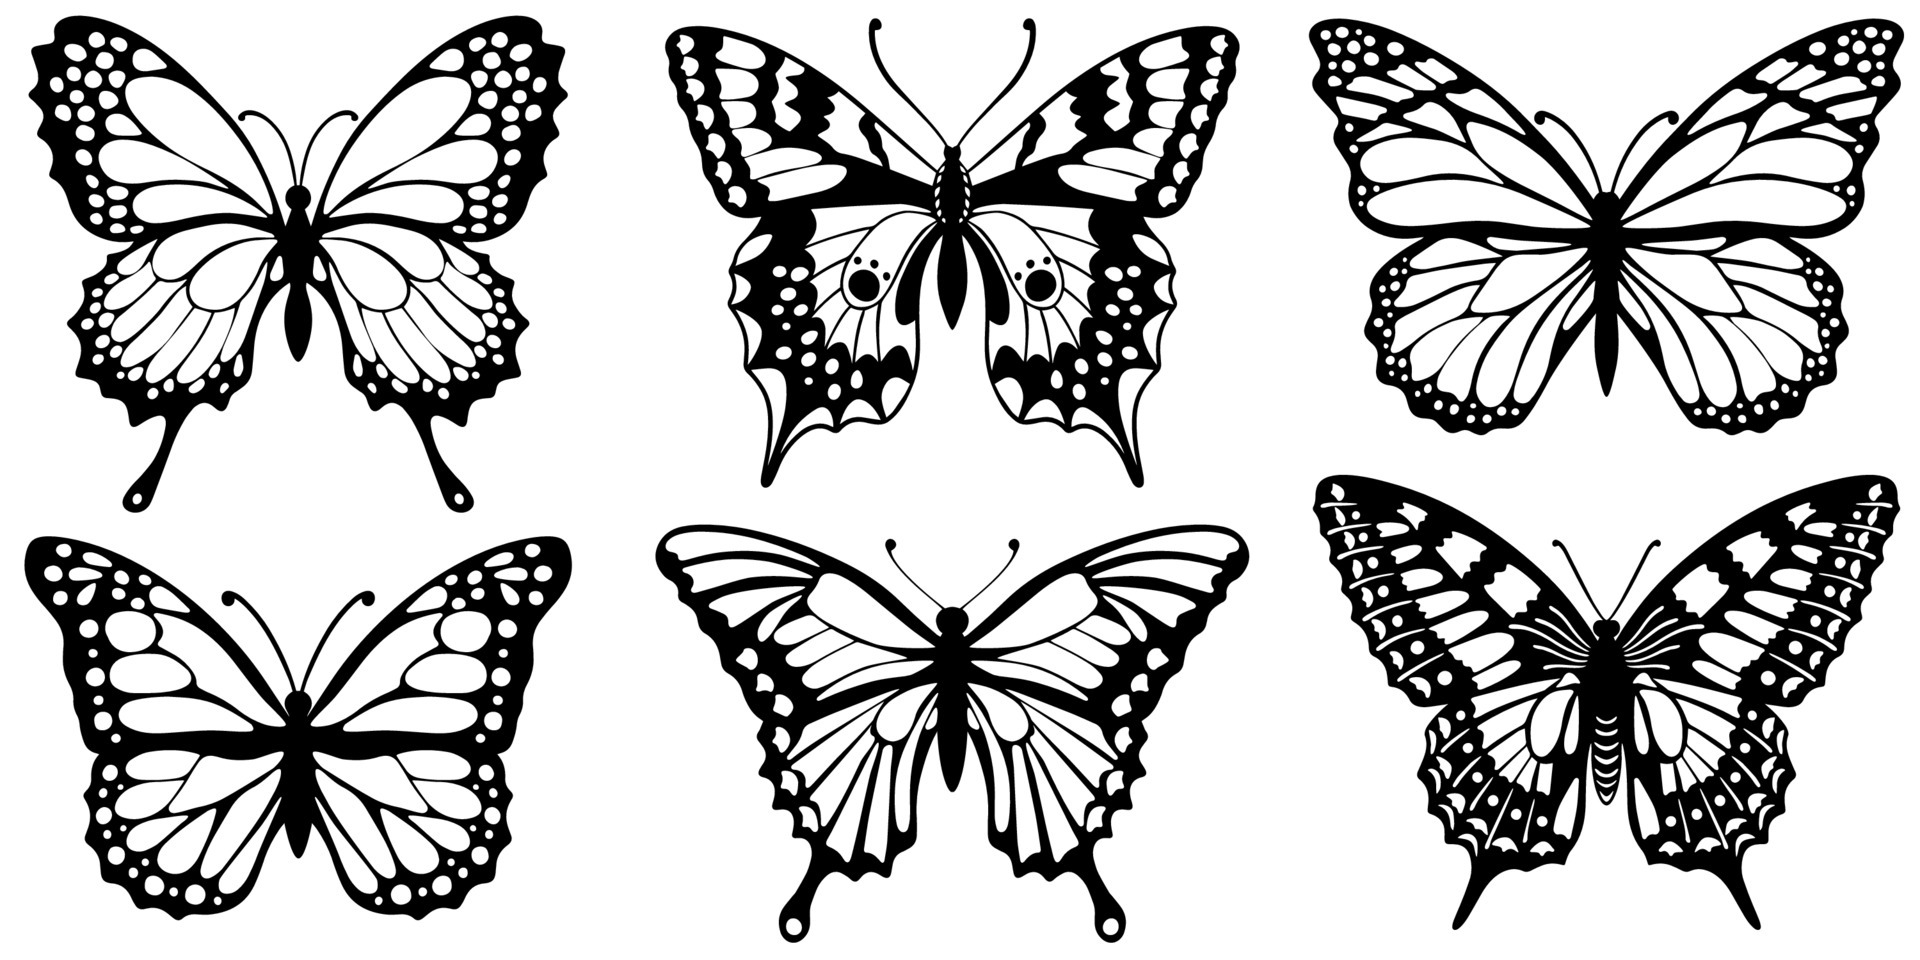 Minimalist Butterfly Tattoo Designs - wide 10